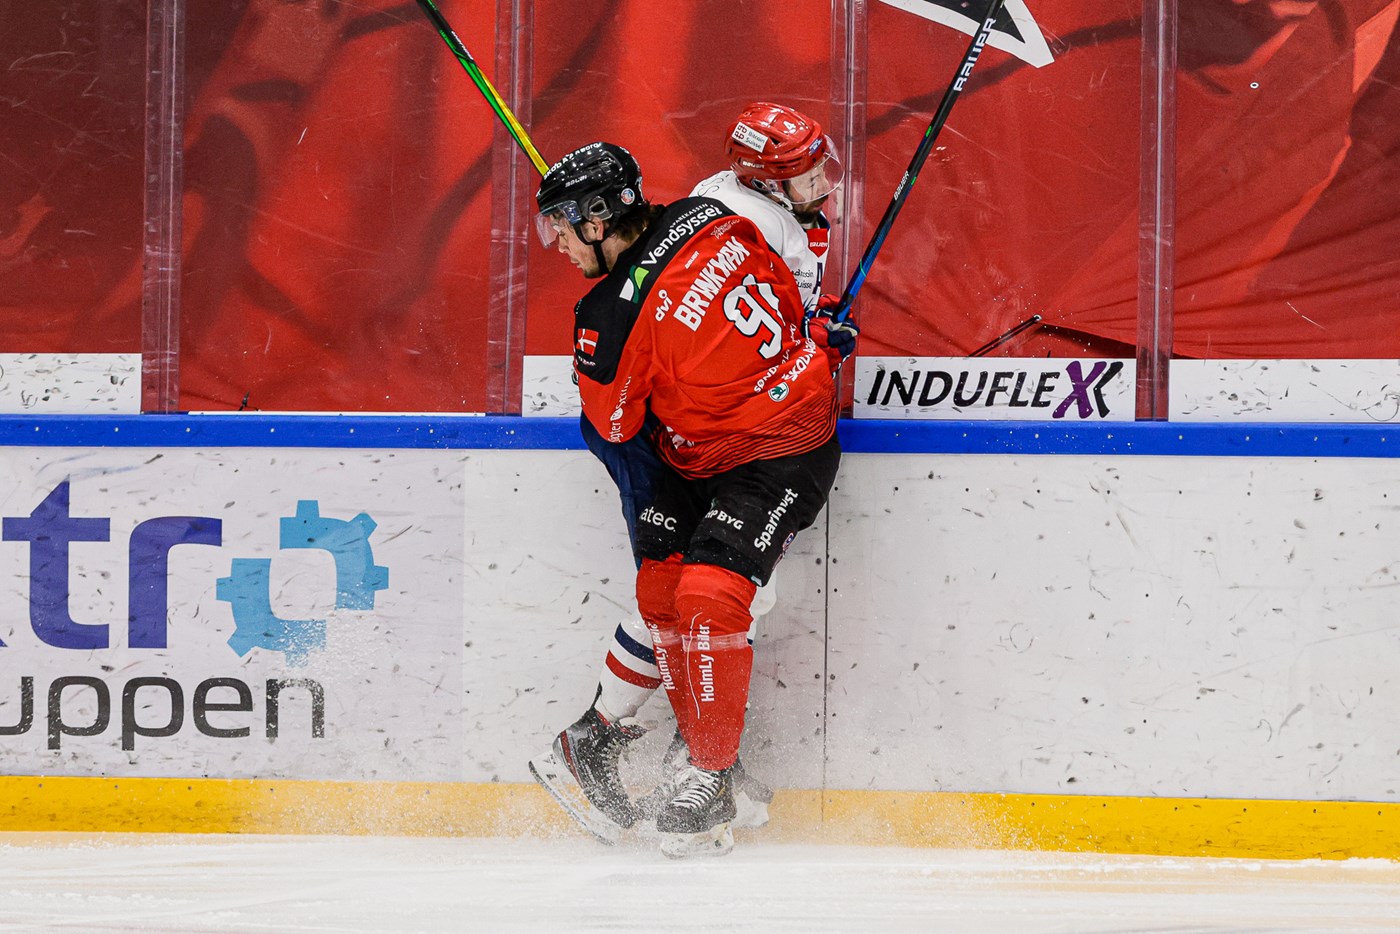 Foto: Danmarks Ishockey Union